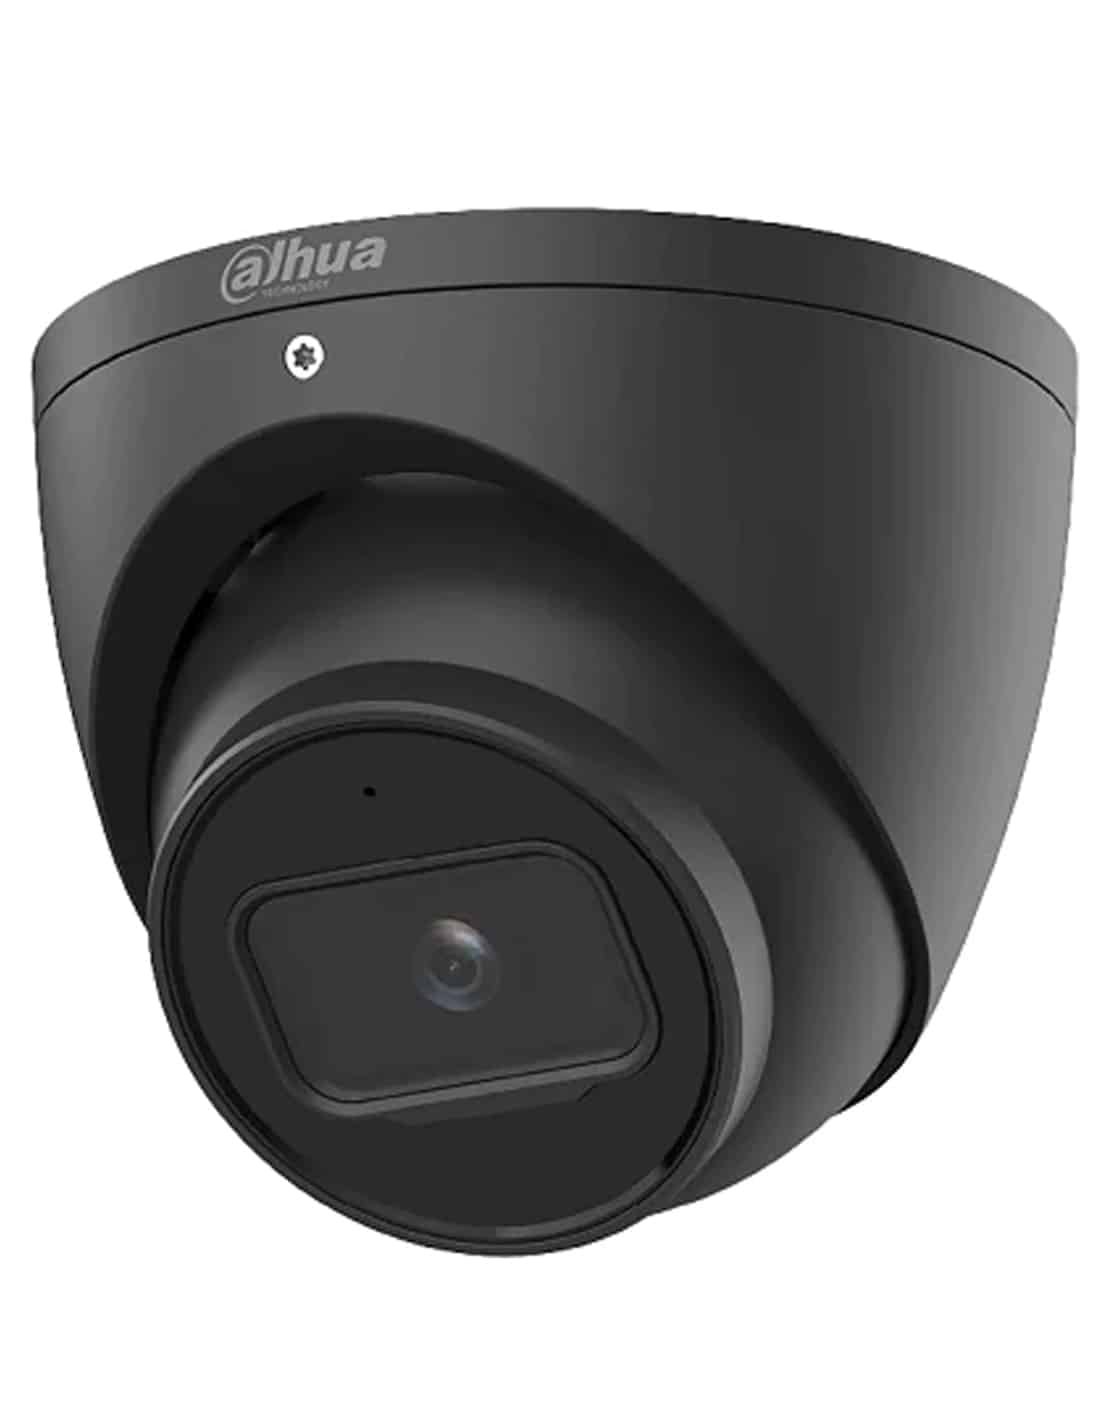 dahua 4mp dome black security camera ir fixed focal eyeball wizsense network dh ipc hdw3466emp s aus blk